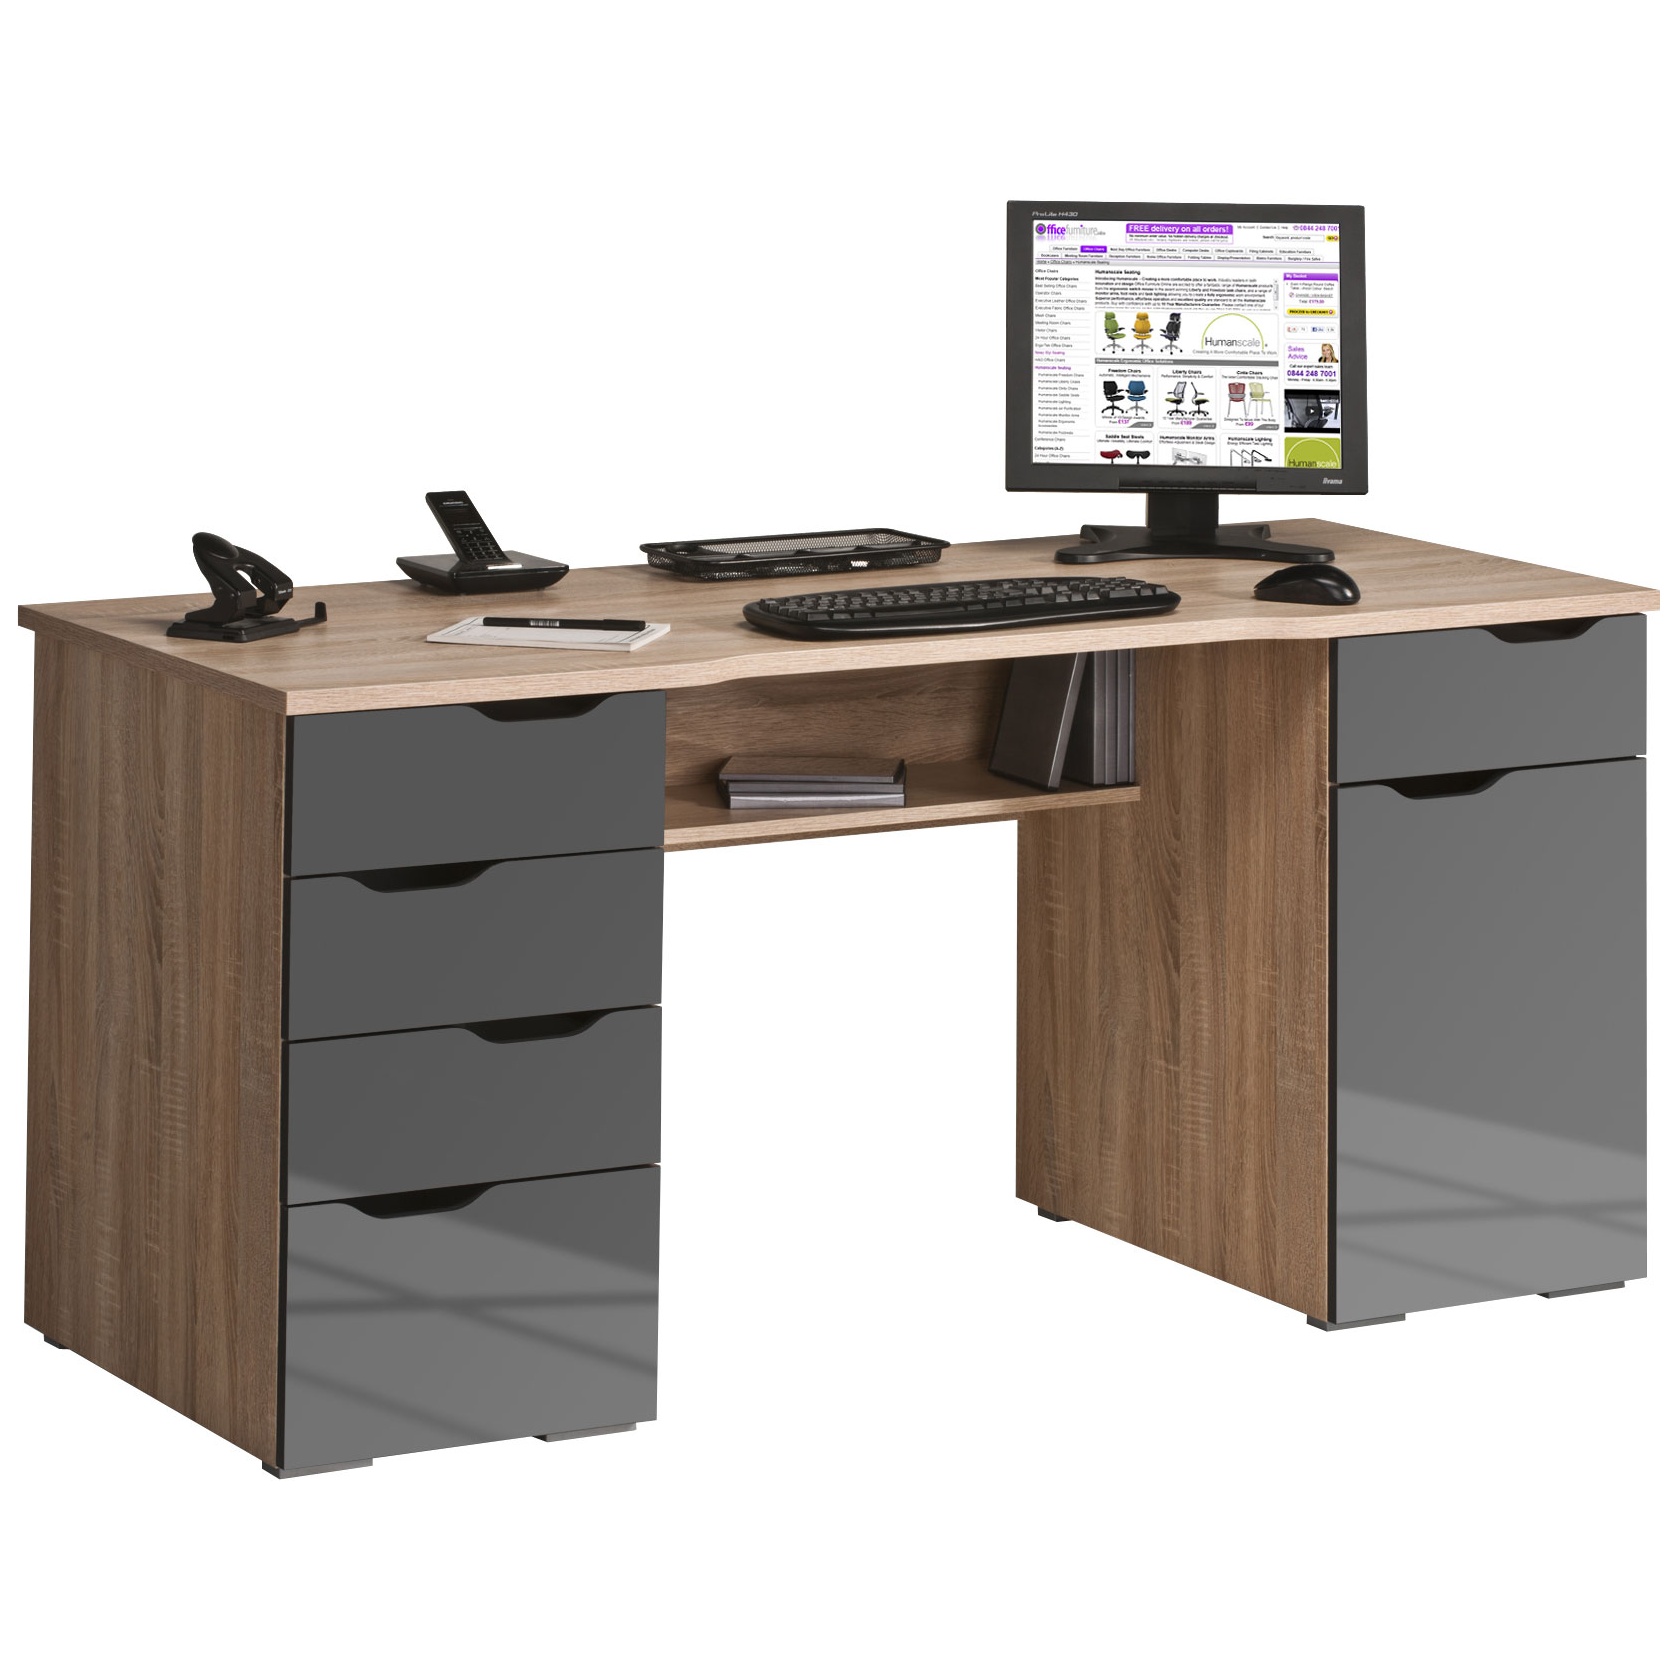 Computer Desk Costco Home : HP p7 Desktop » Welcome to Costco Wholesale